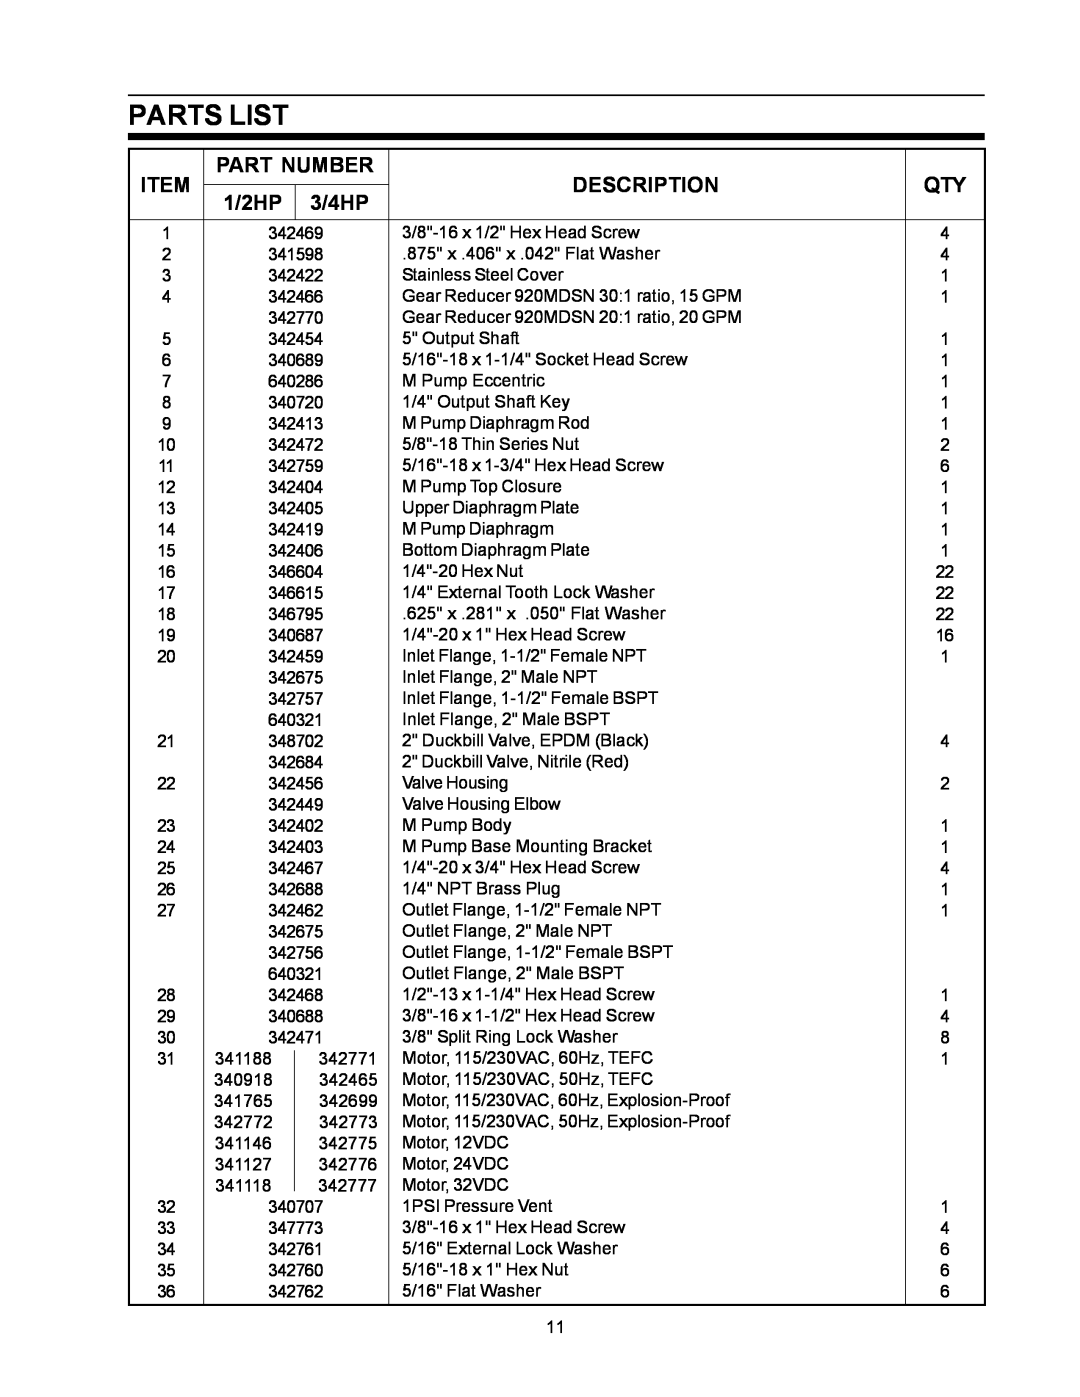 SeaLand Vacuum Pump owner manual Description, Parts List, Part Number, 1/2HP, 3/4HP 